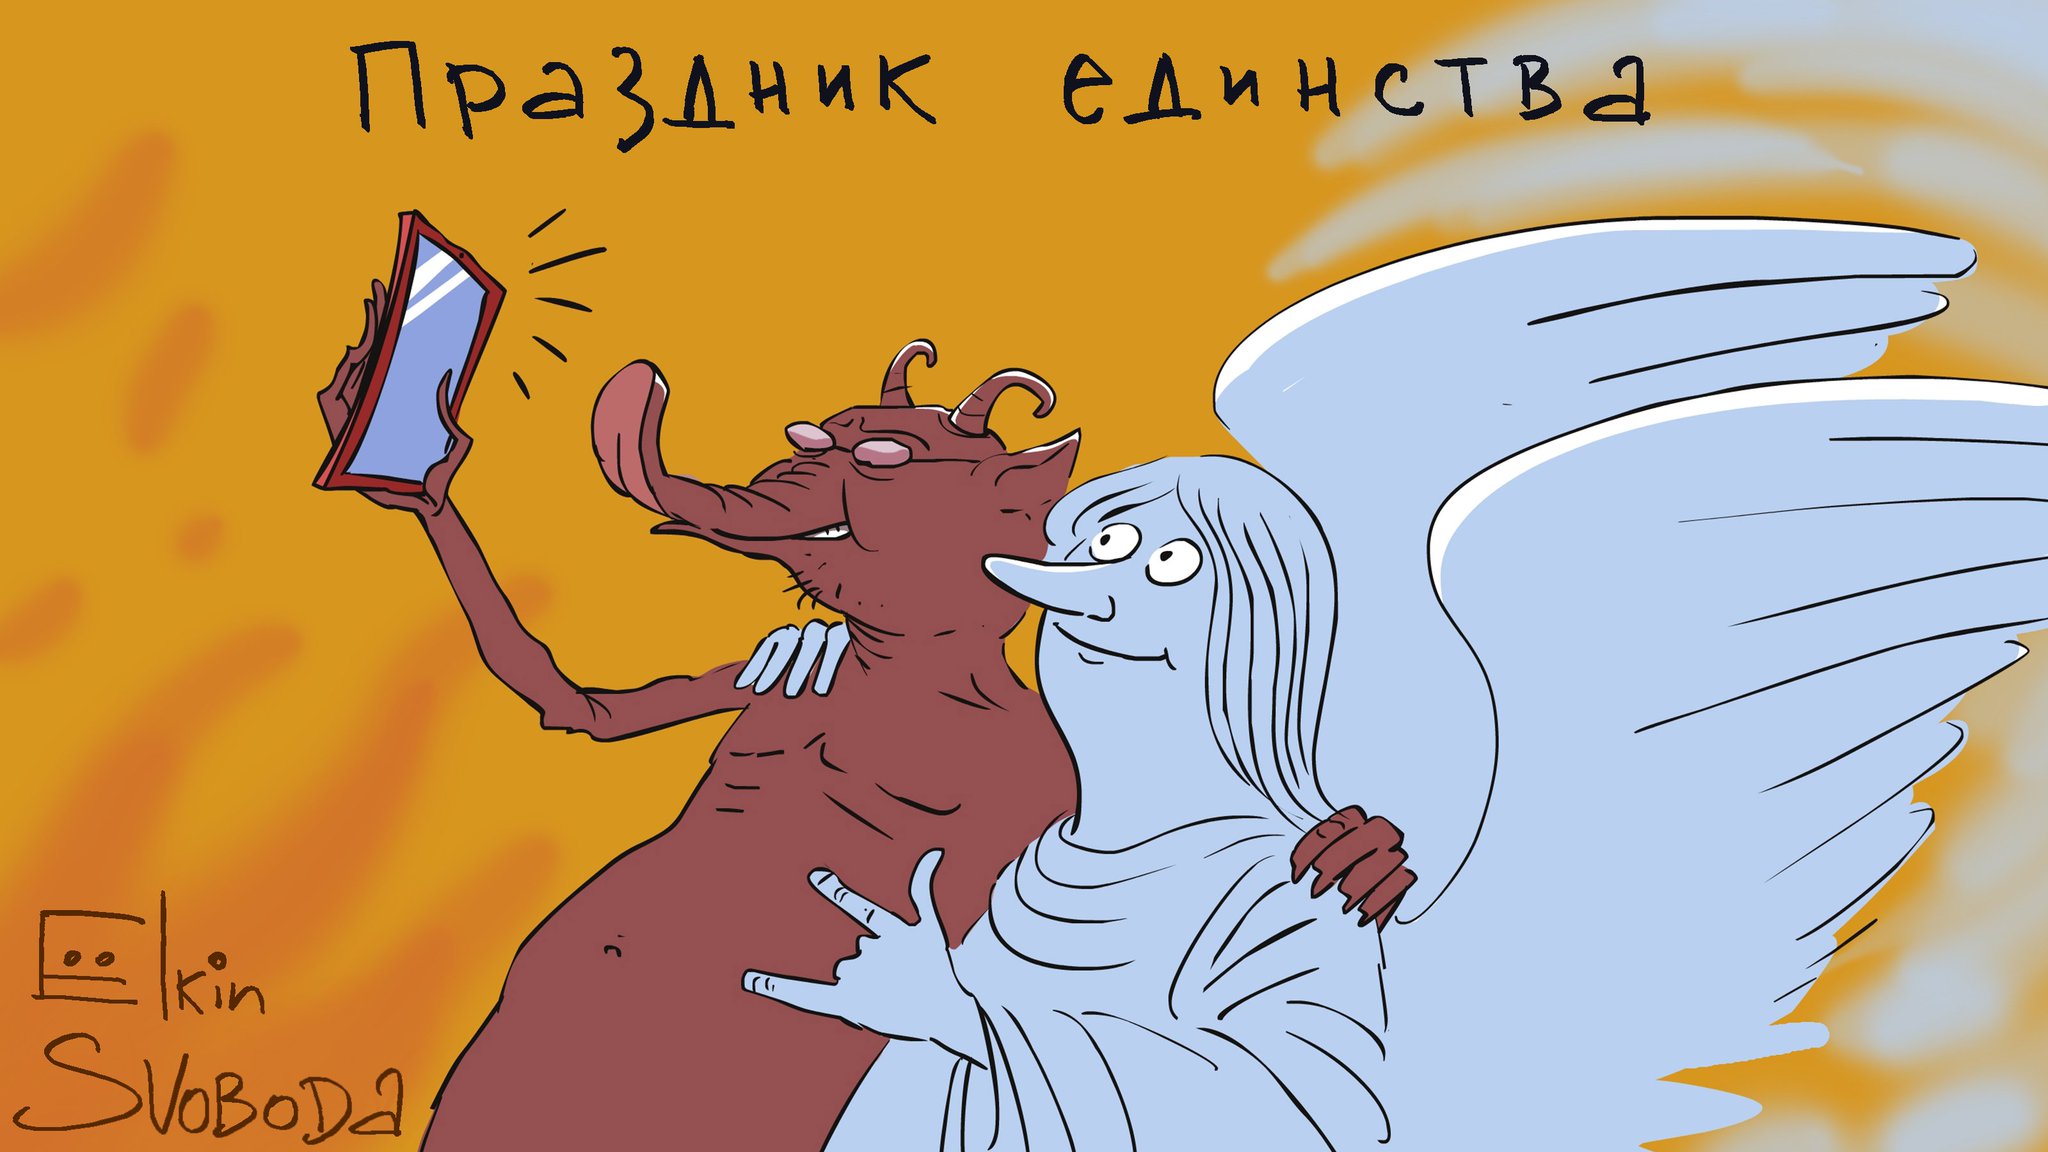 Www svoboda. Свобода карикатура. Единство карикатура. День единства карикатура. Народное единство карикатура.